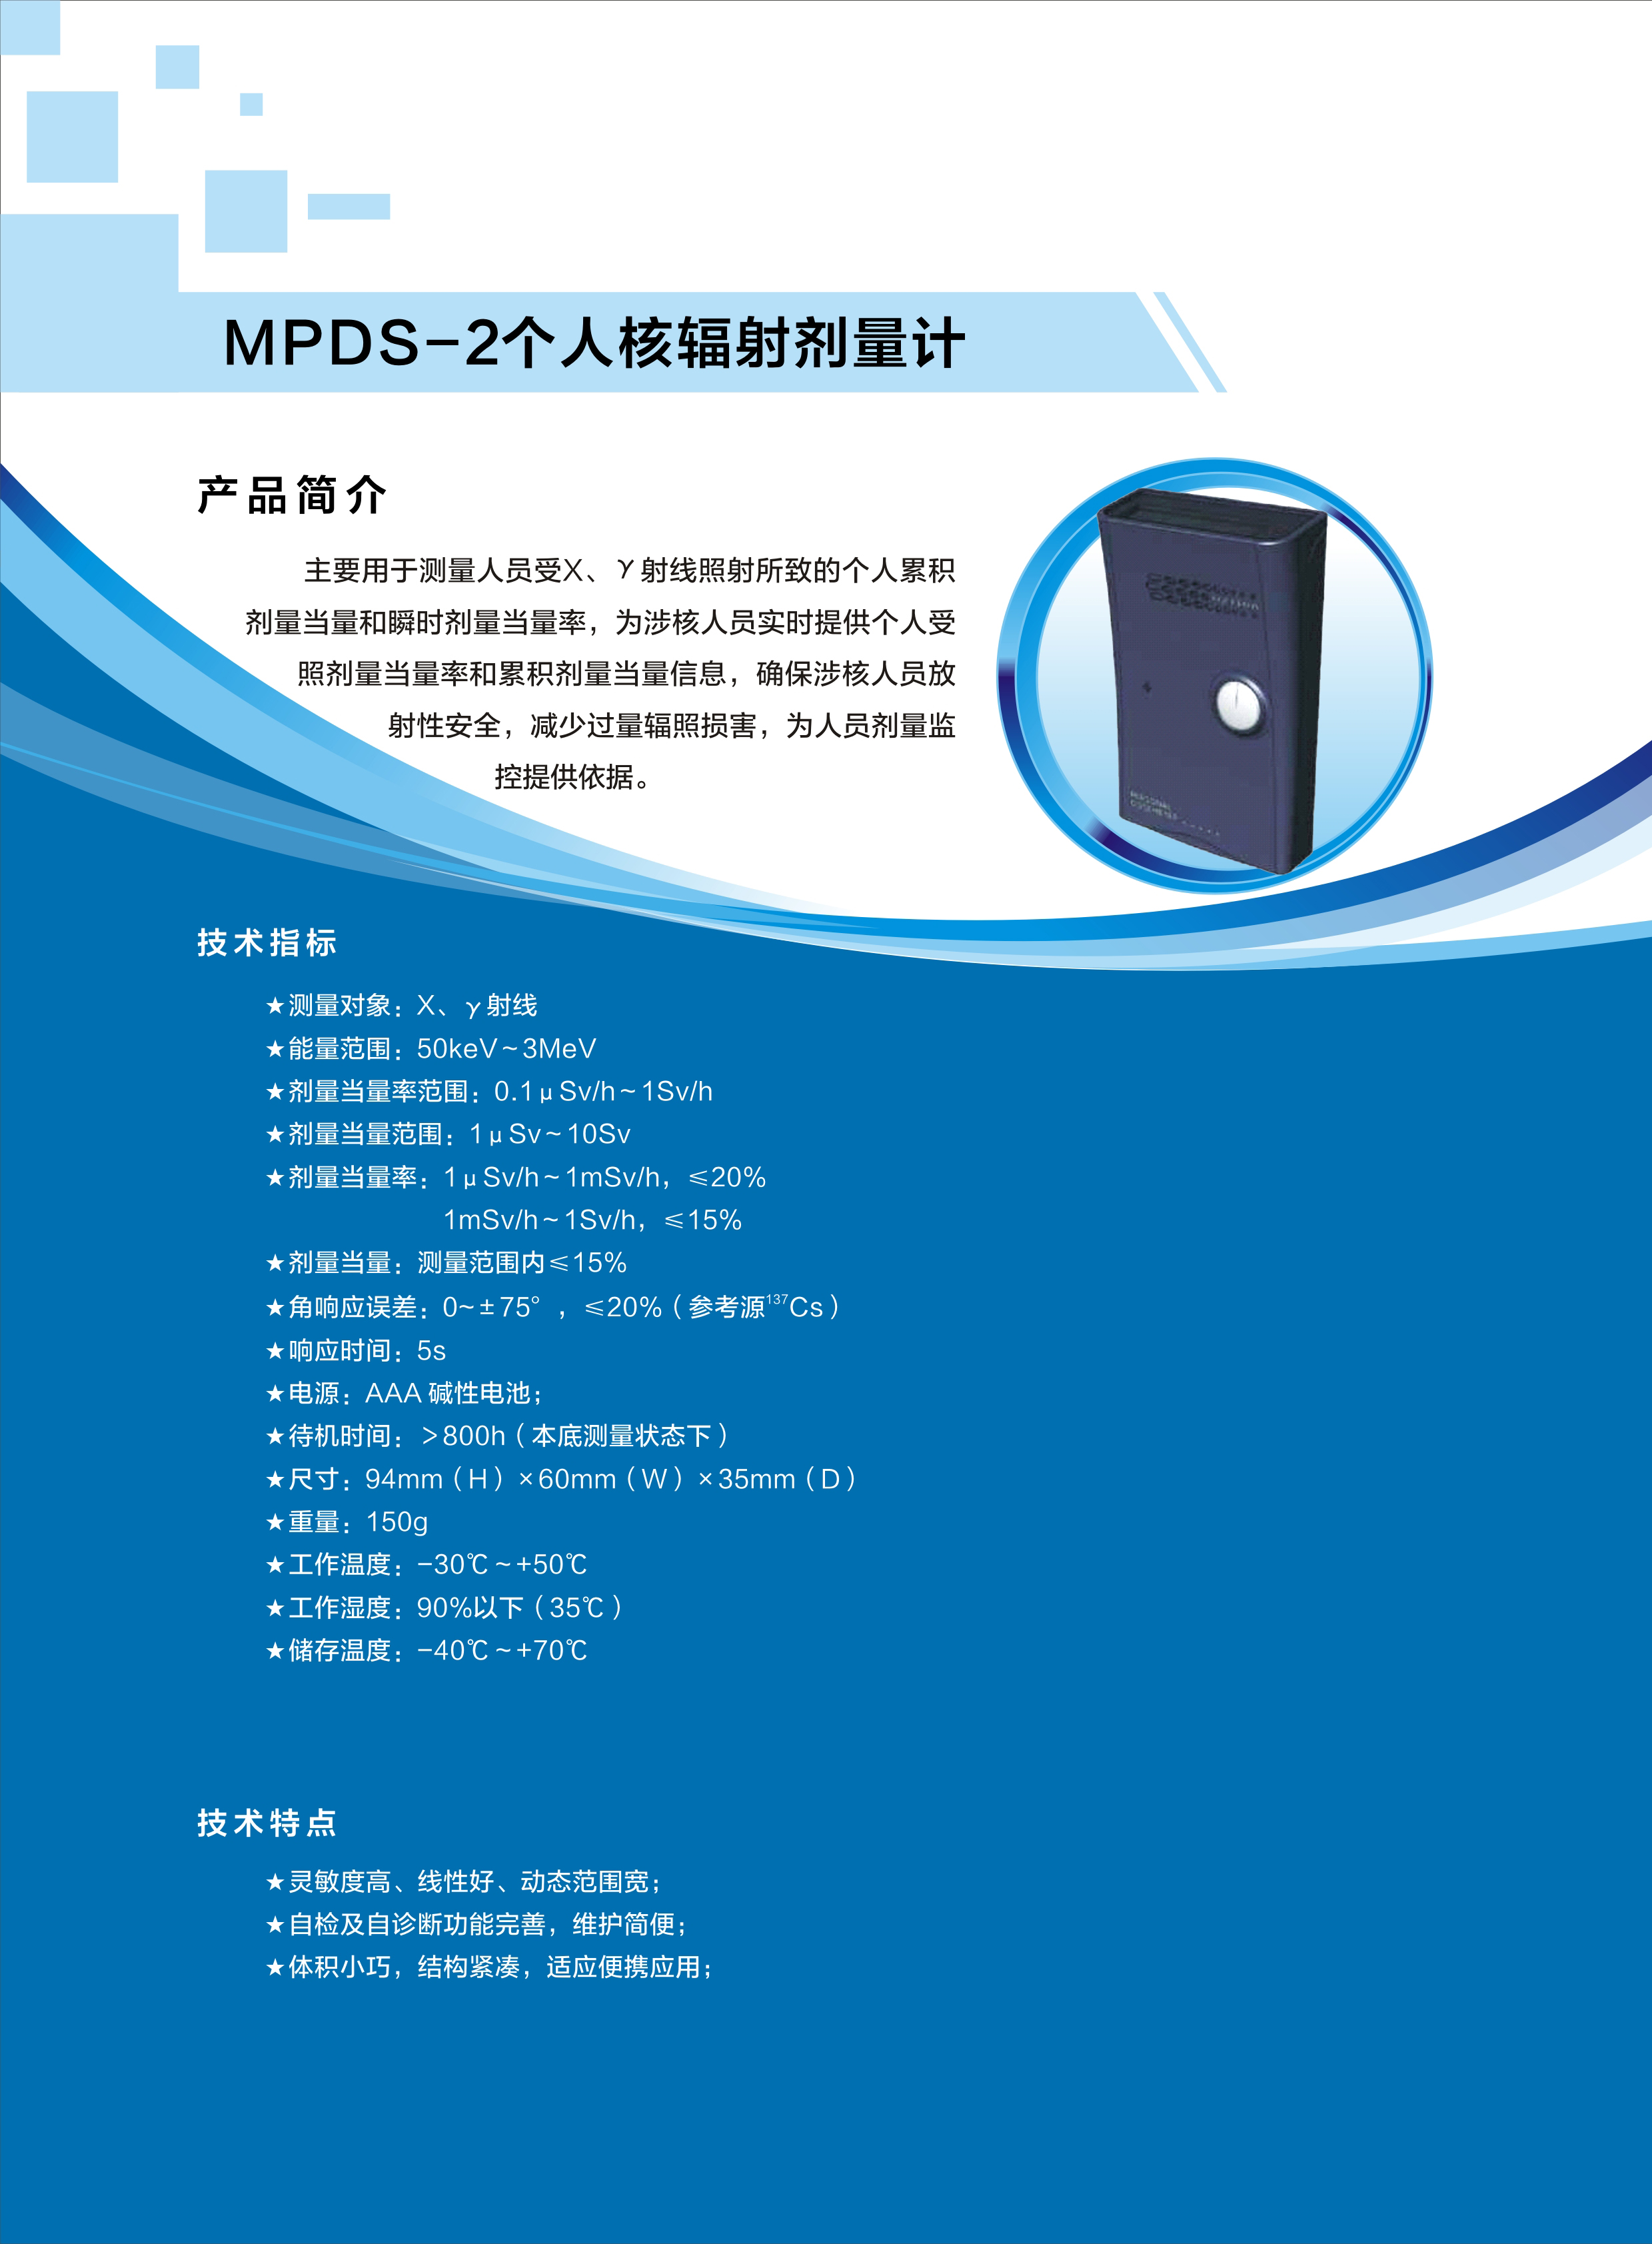 1.MPDS-2个人核辐射剂量计.jpg